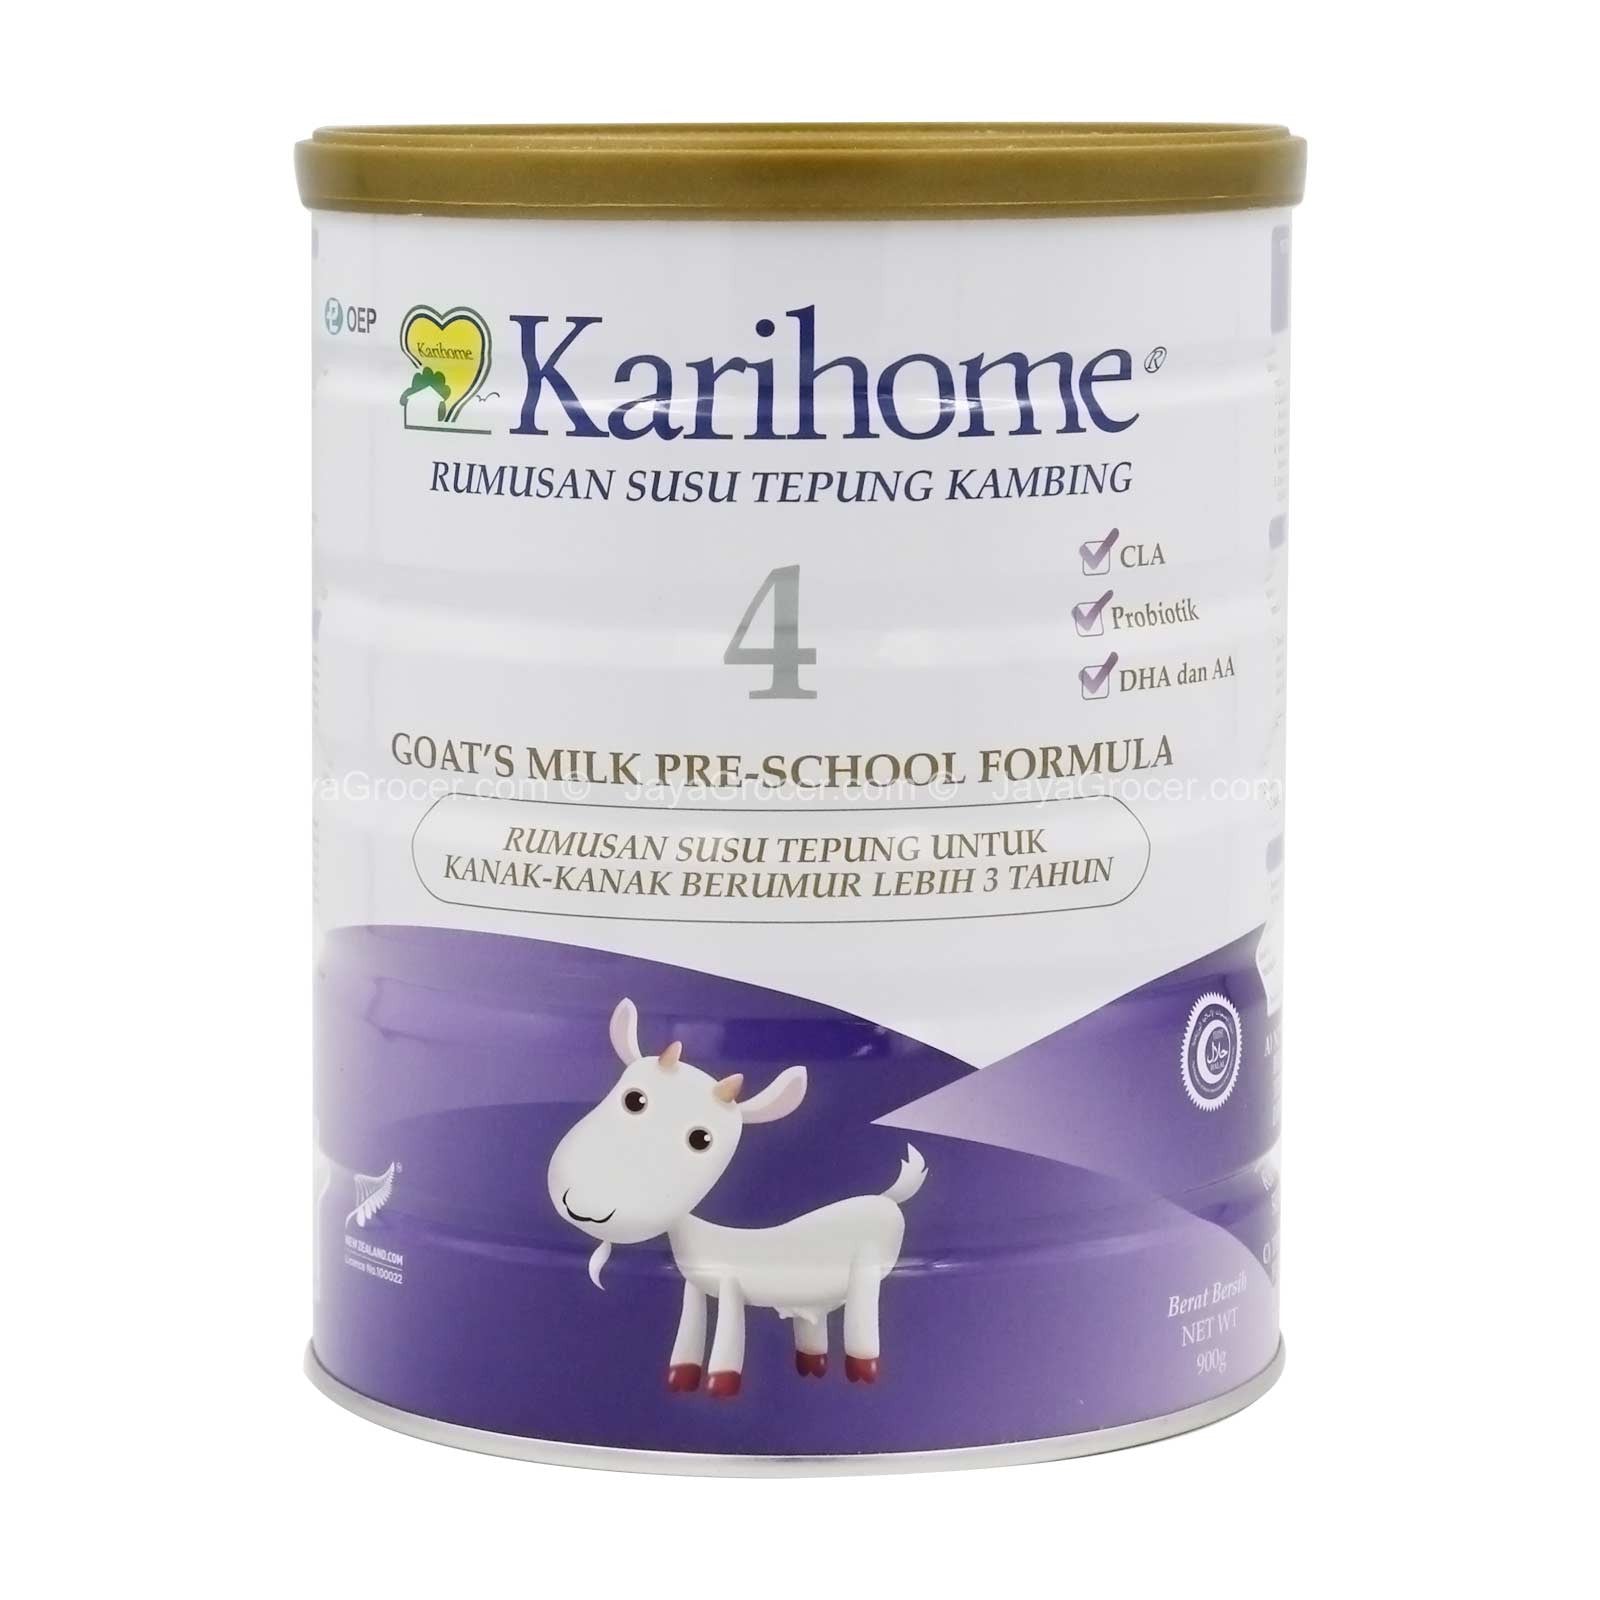 Karihome Step 4 Goat's Milk Pre-School Formula 900g For Children 3 to 7 Years Old